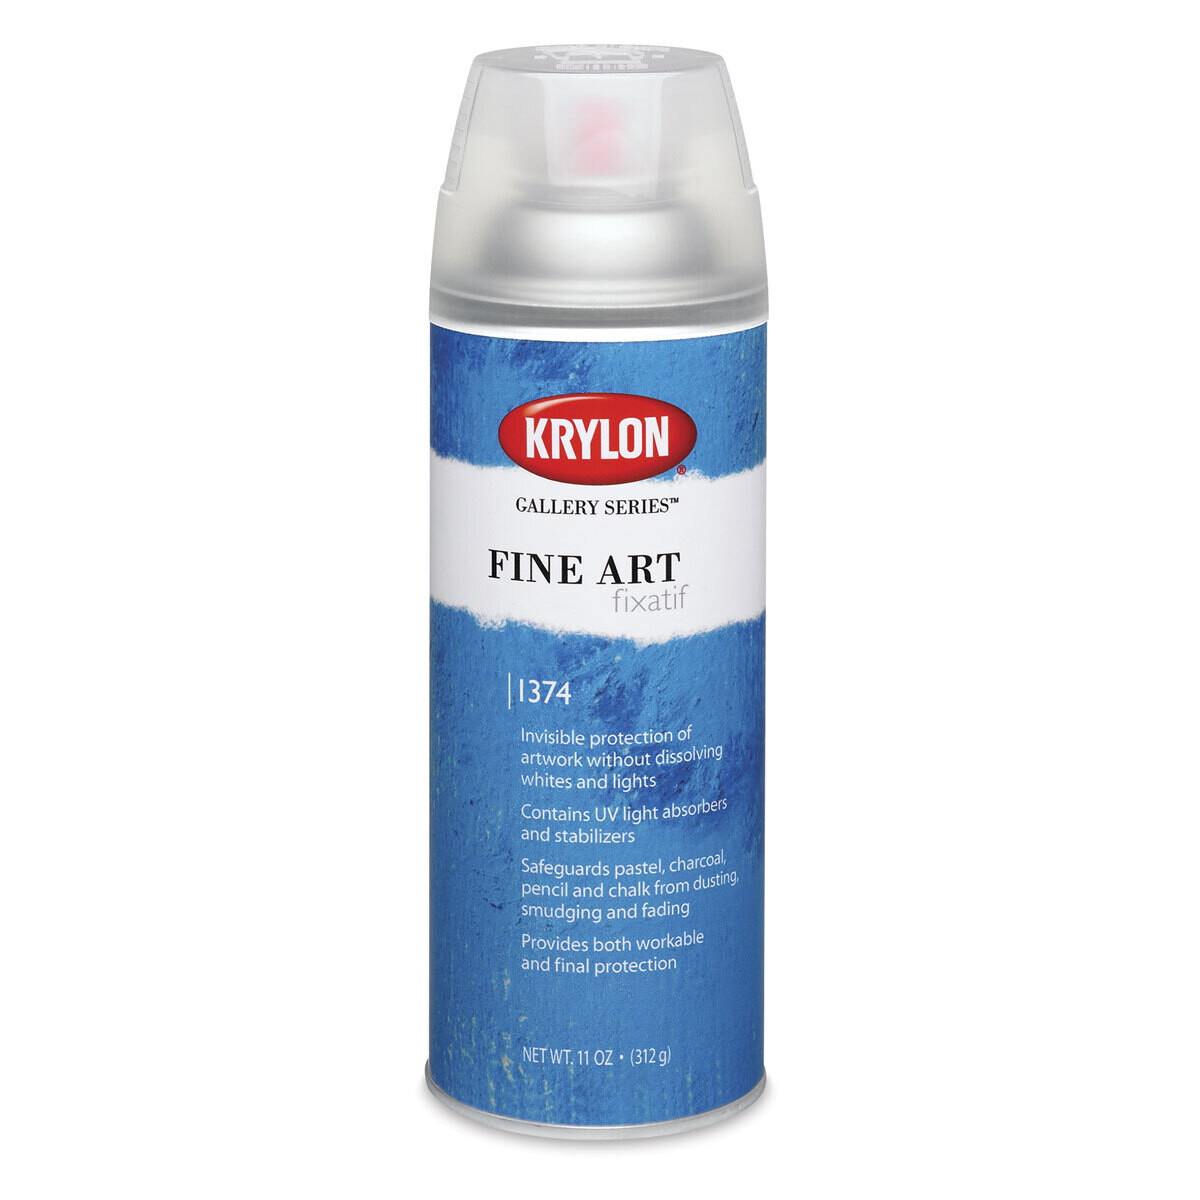 Krylon Gallery Series Fine Art Fixatif - 11 oz